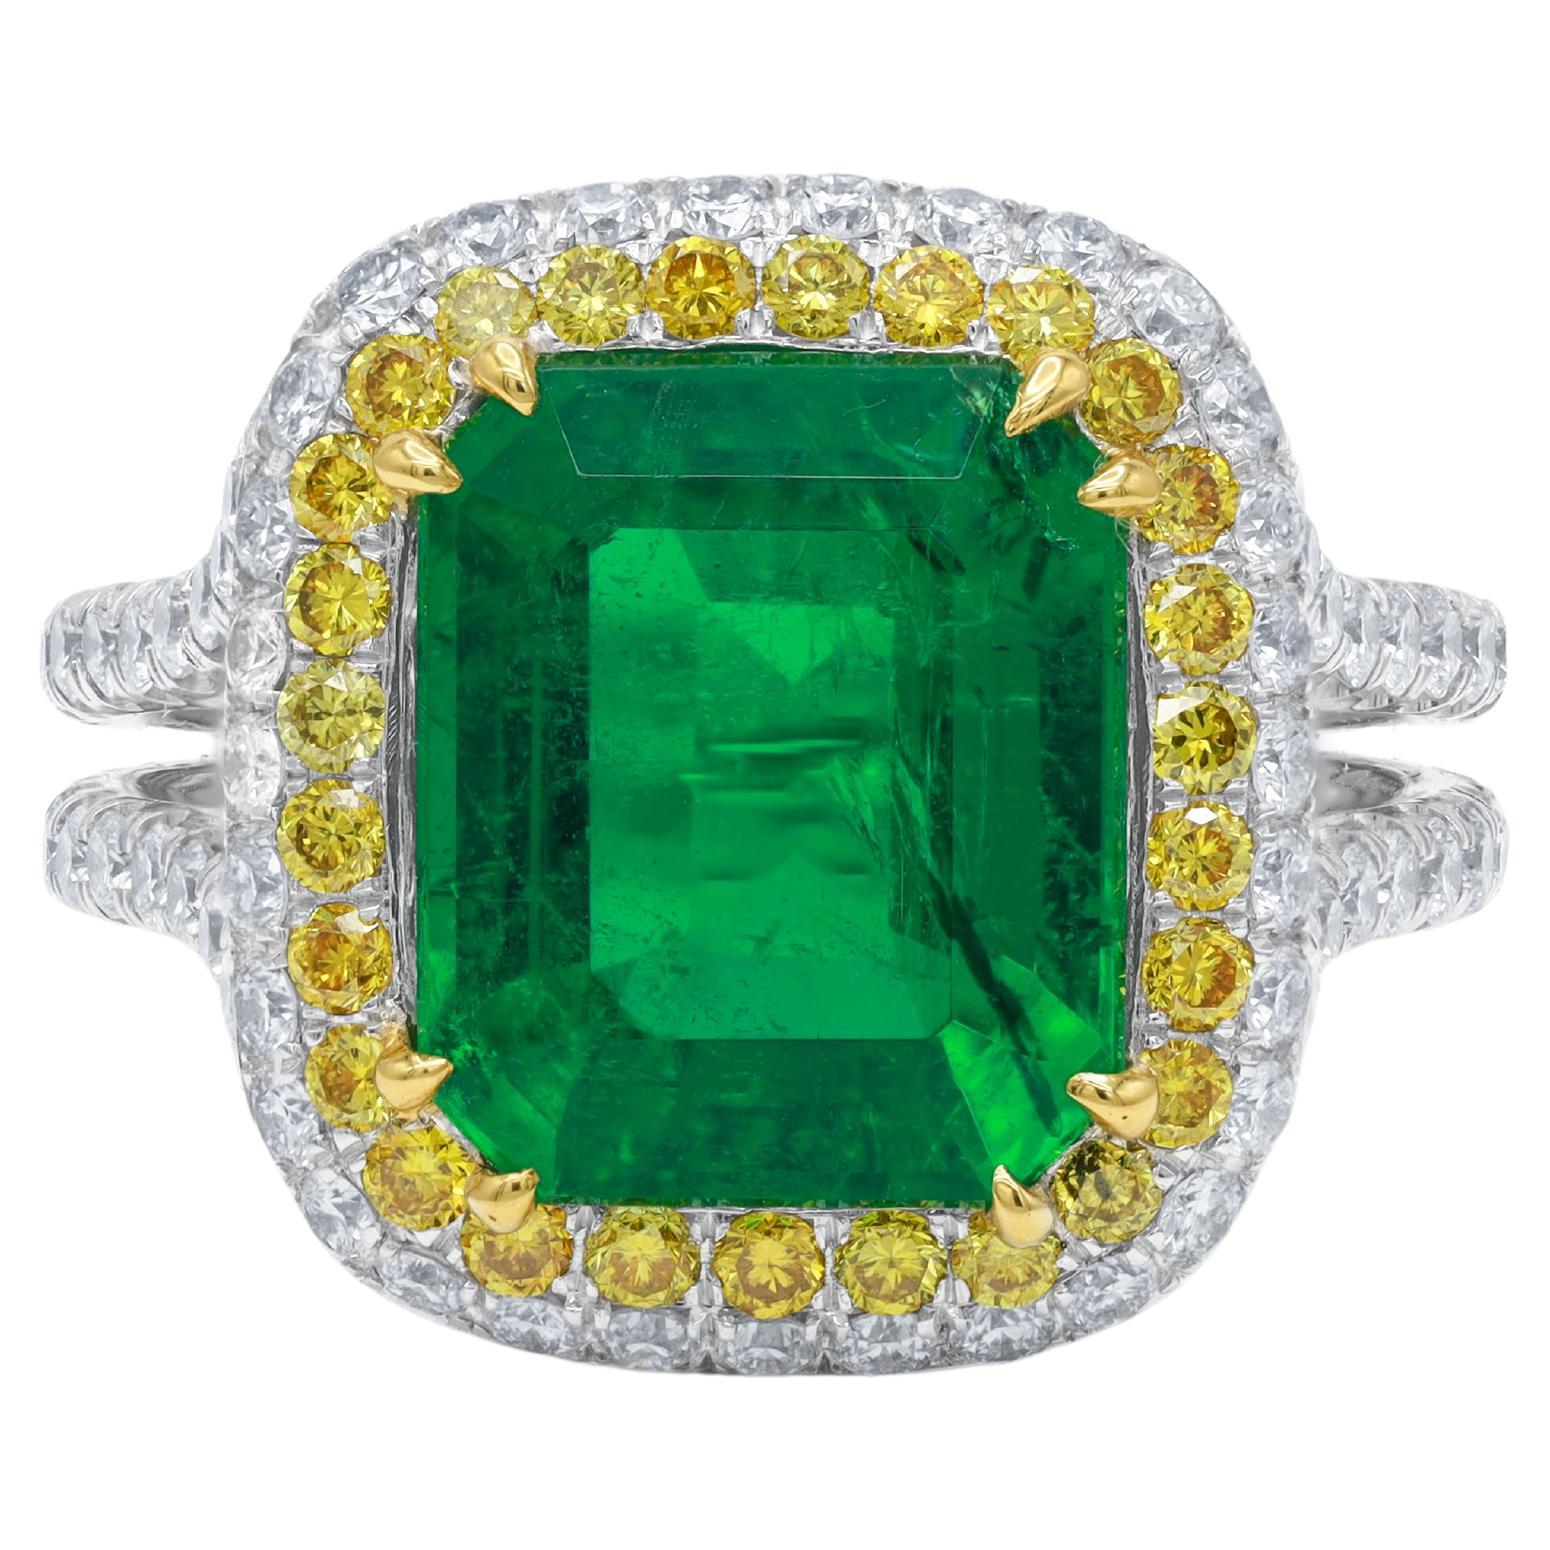 Diana M. 18kt White Gold Emerald Diamond Ring 3.97ct